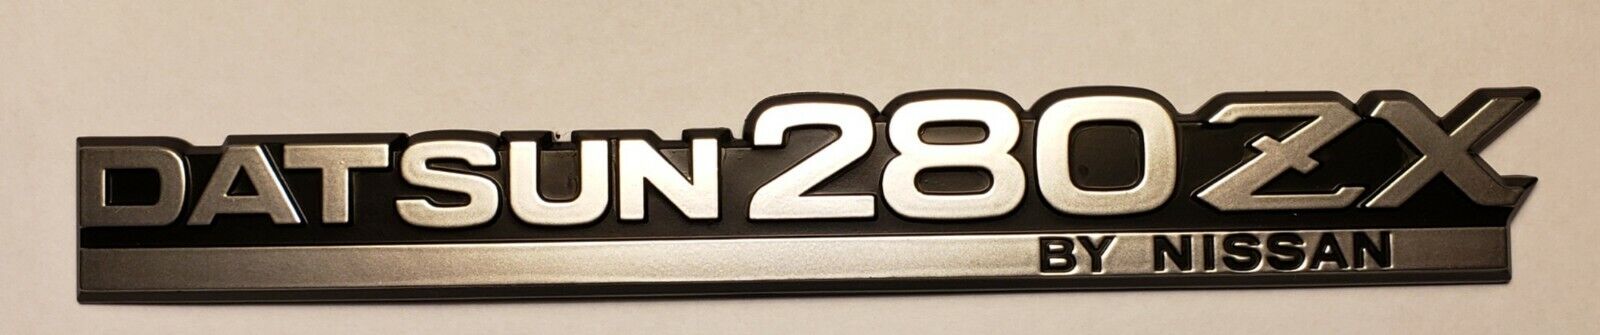 New Datsun 280ZX Badge Sticker Nameplate 1978-1983 Series (Black/Satin)